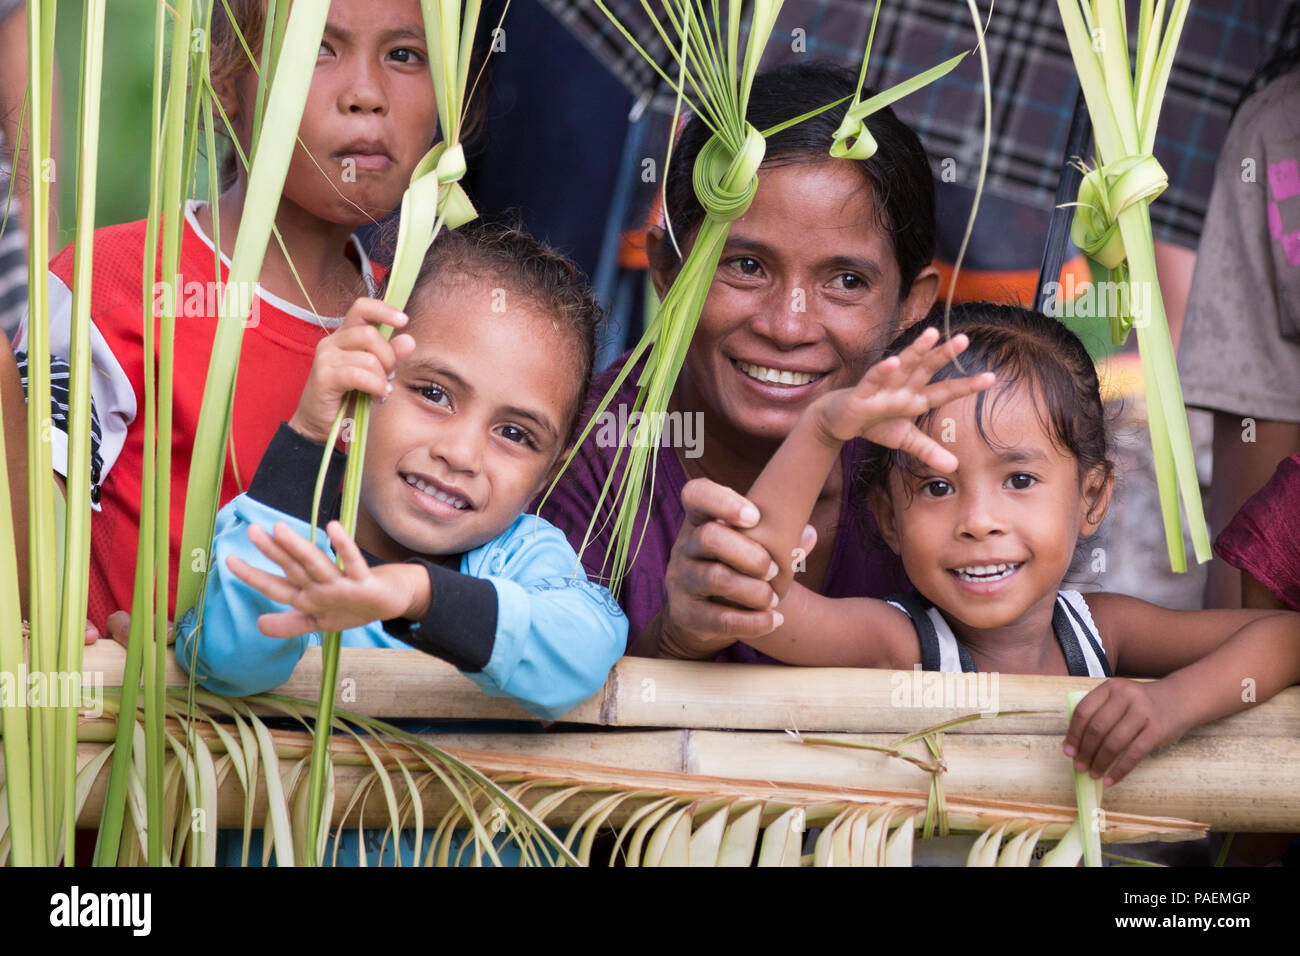 Leti Islands festive and cultural celebrations, Indonesia Stock Photo